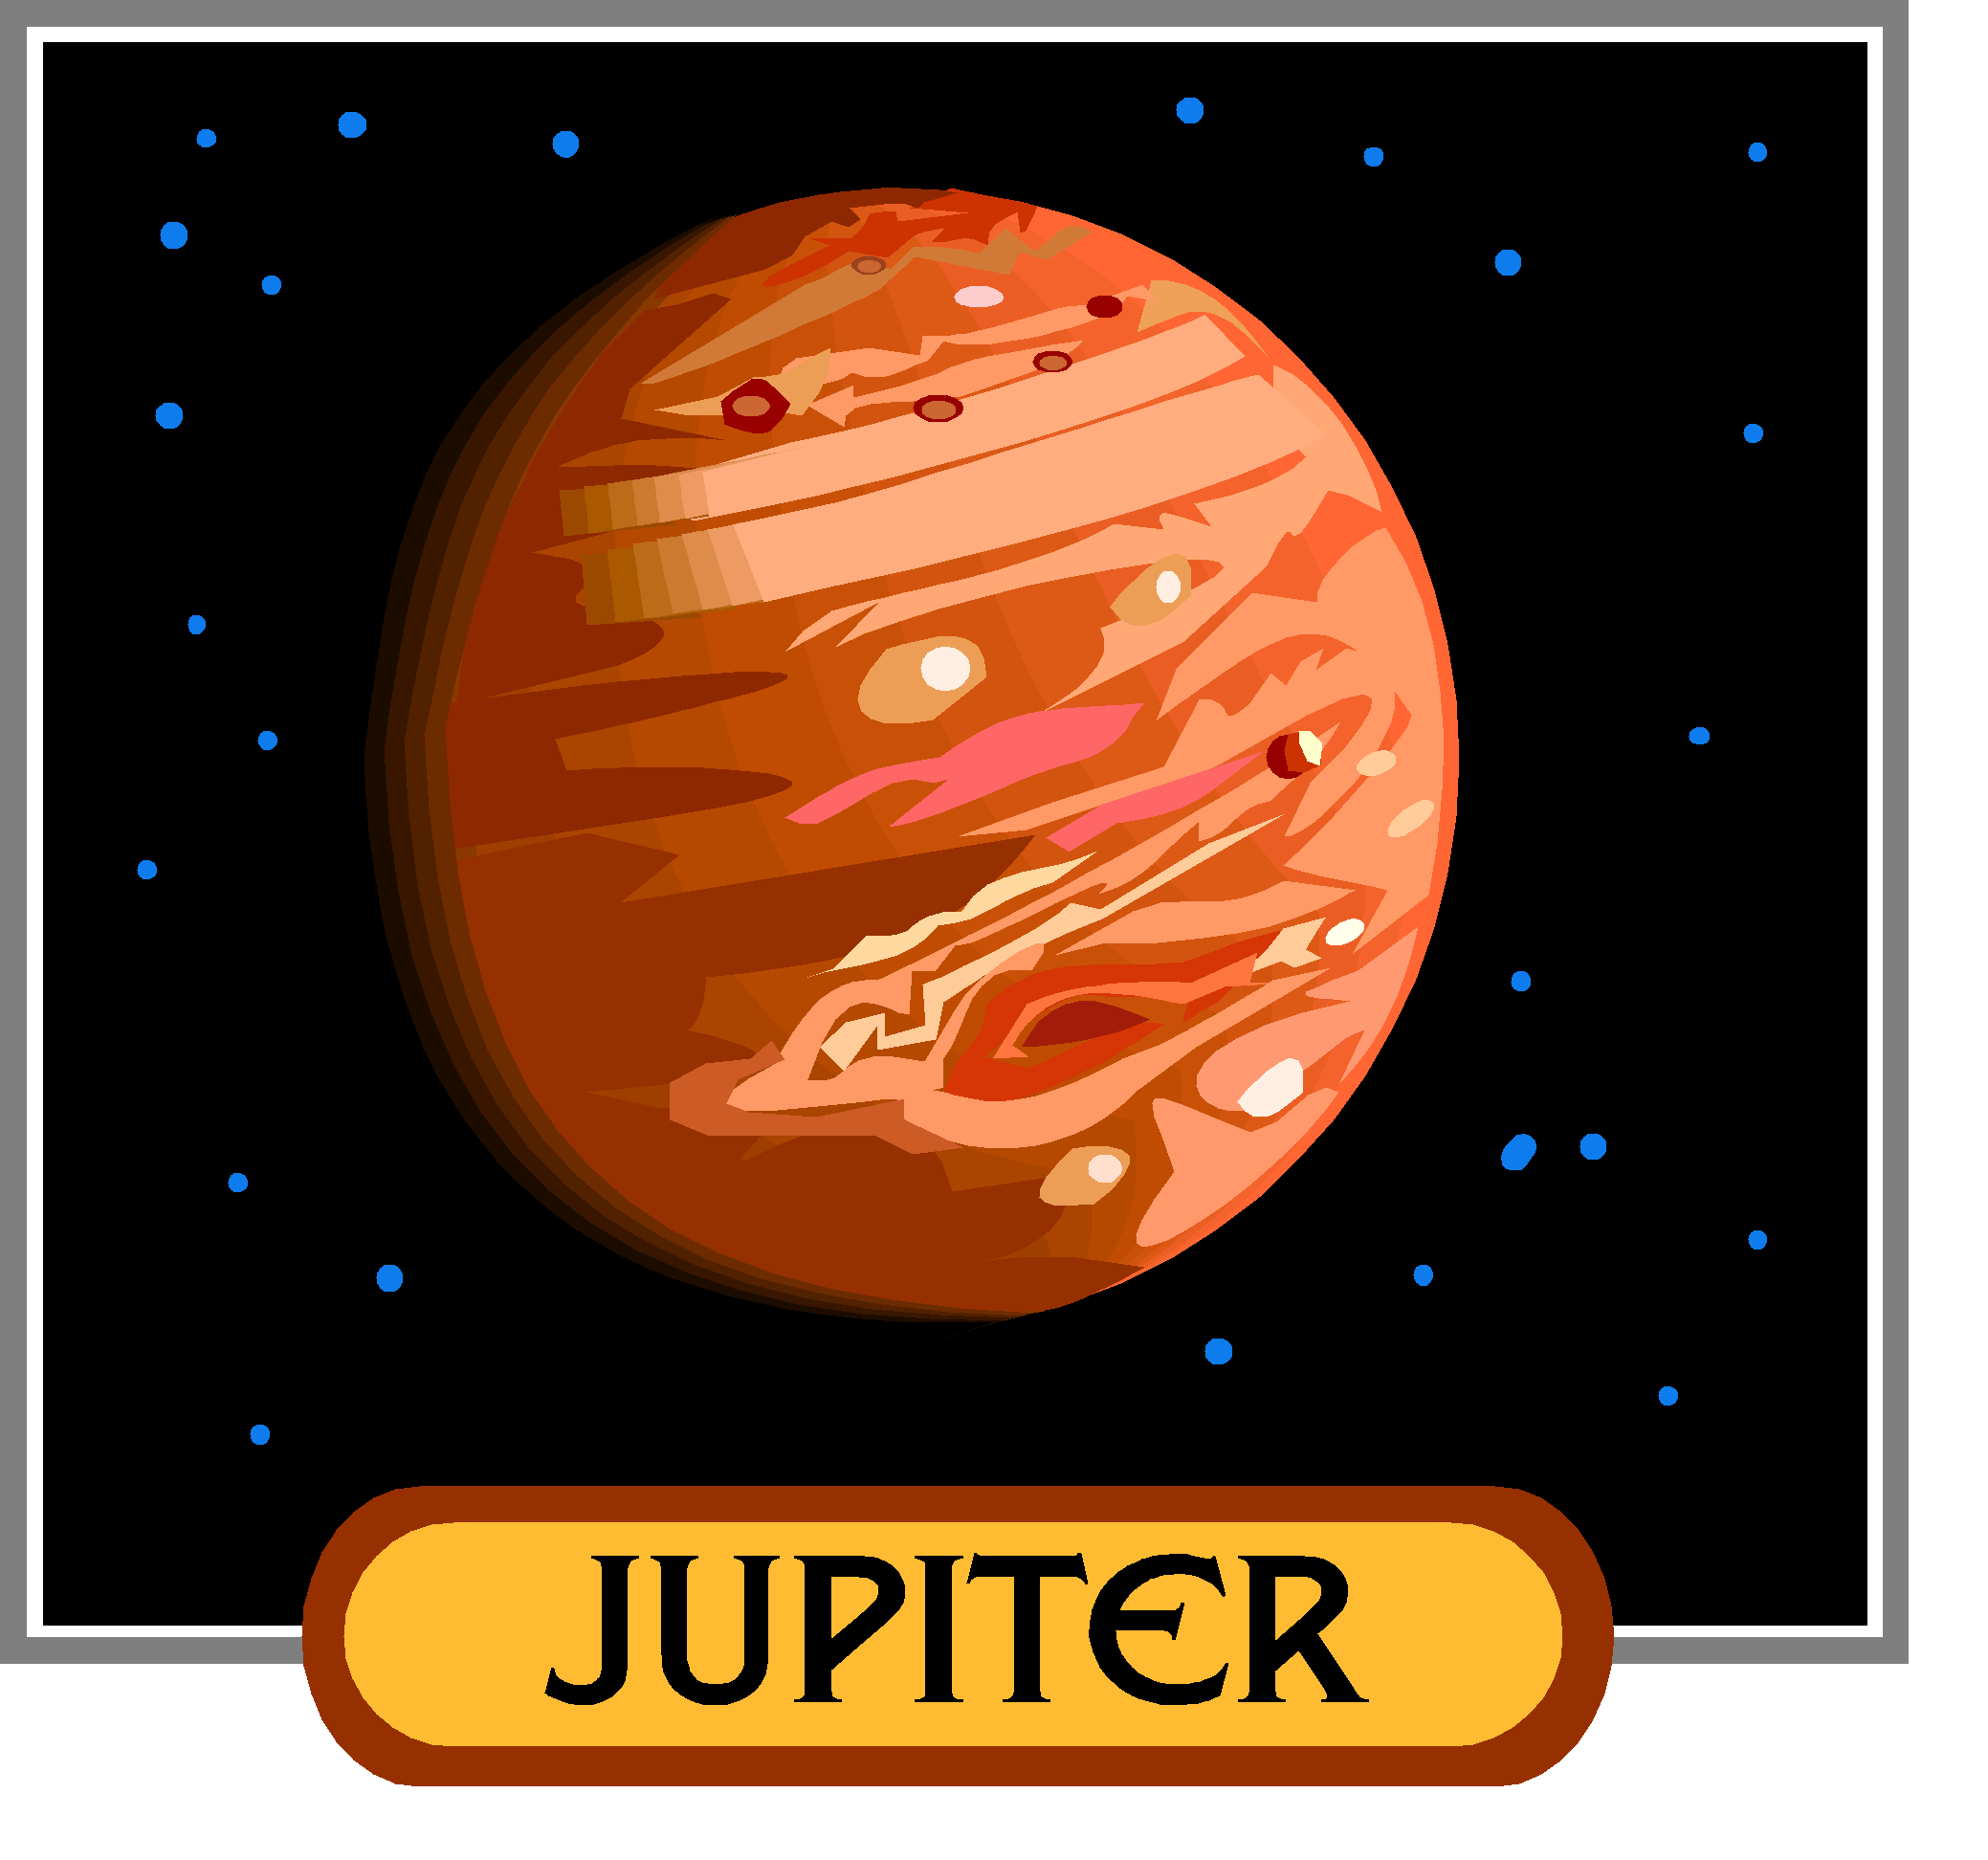 Юпитер планета картинка для детей. Юпитер для детей. Юпитер рисунок для детей. Юпитер Планета рисунок. Планета Юпитер для детей.